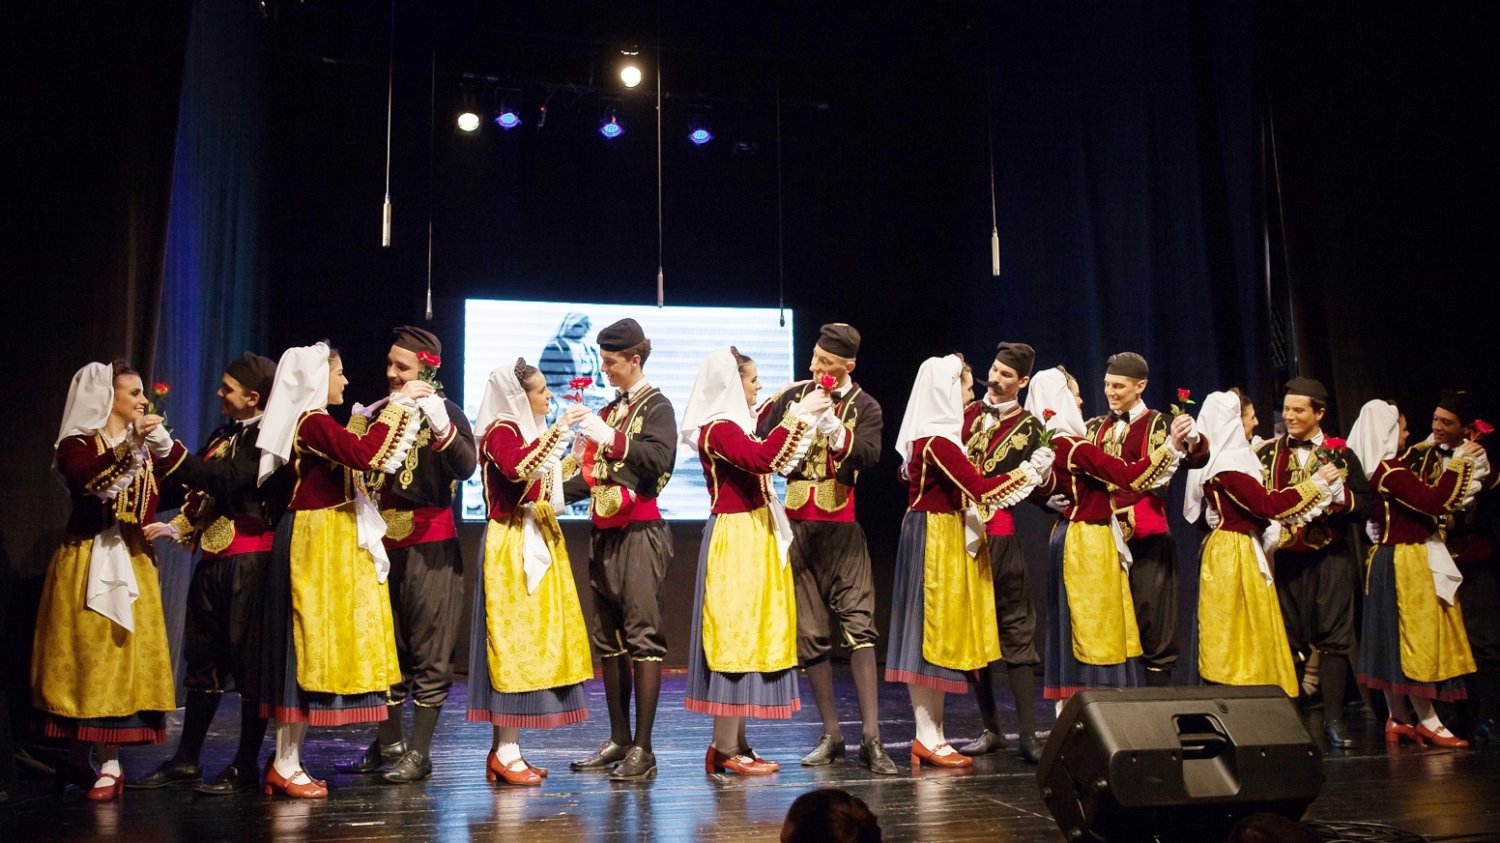 Boka Kotorska Folklore Dance and Tradition